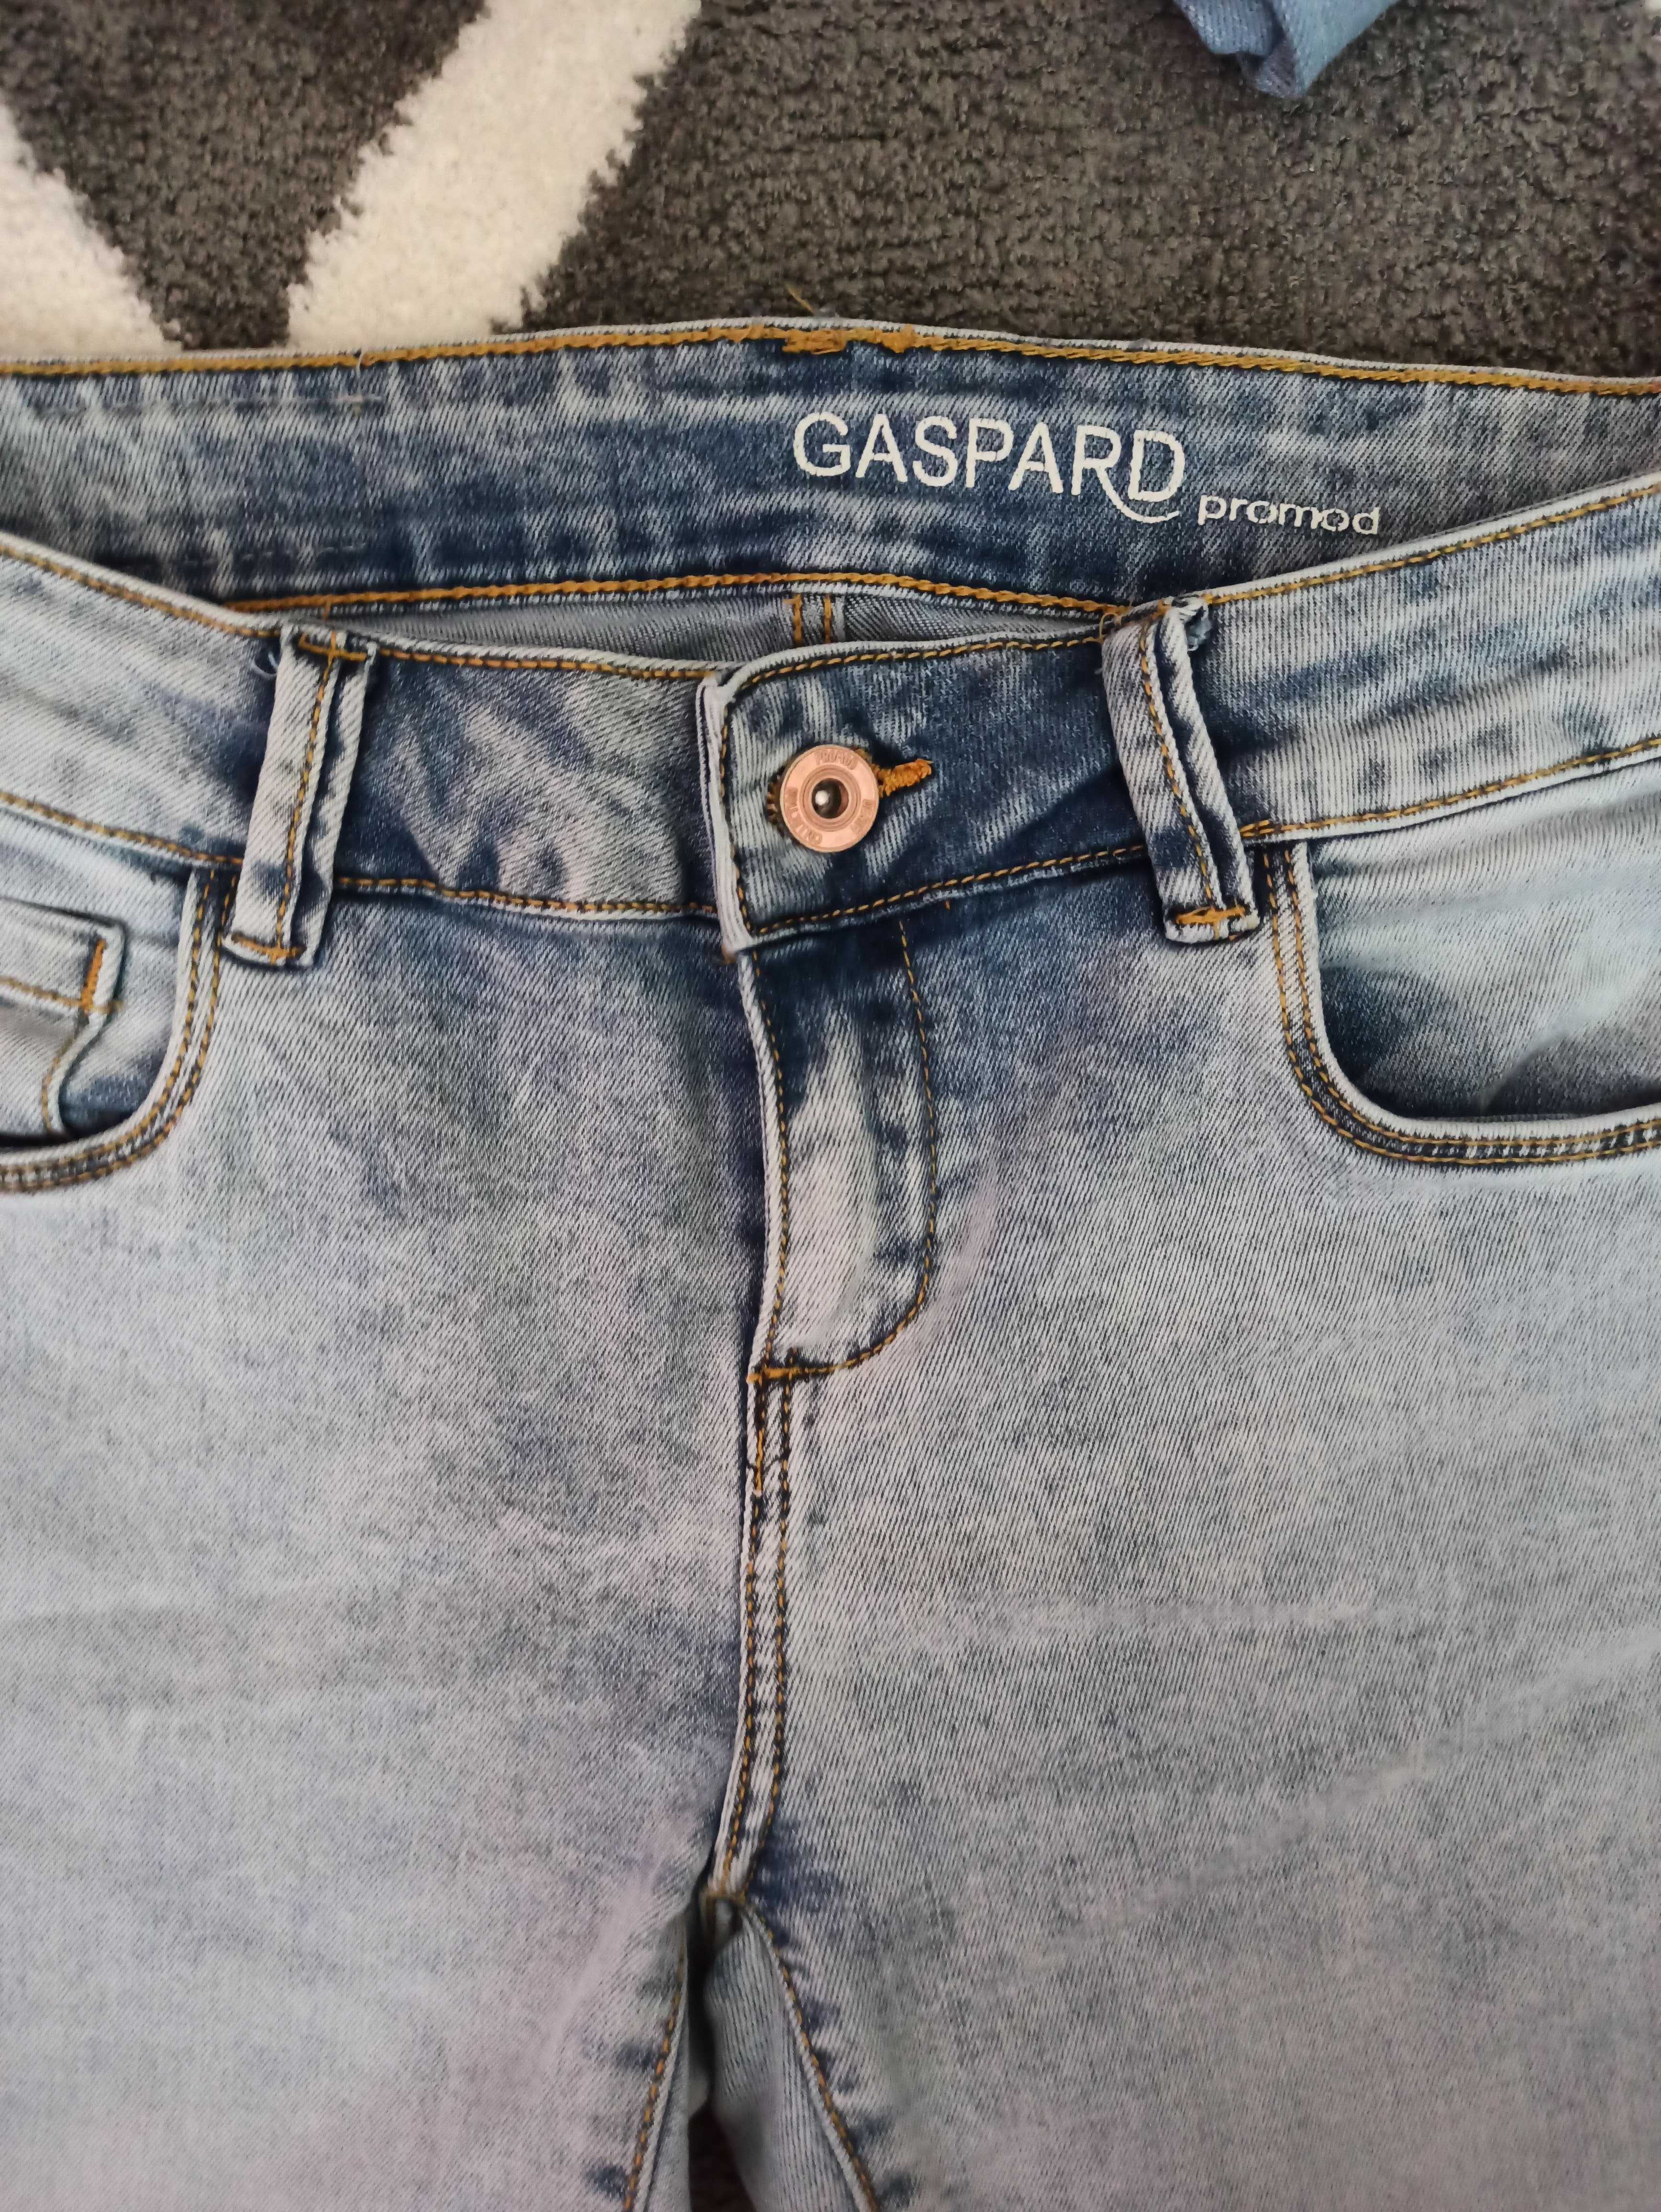 Spodnie jeansy gaspard Promod jasne